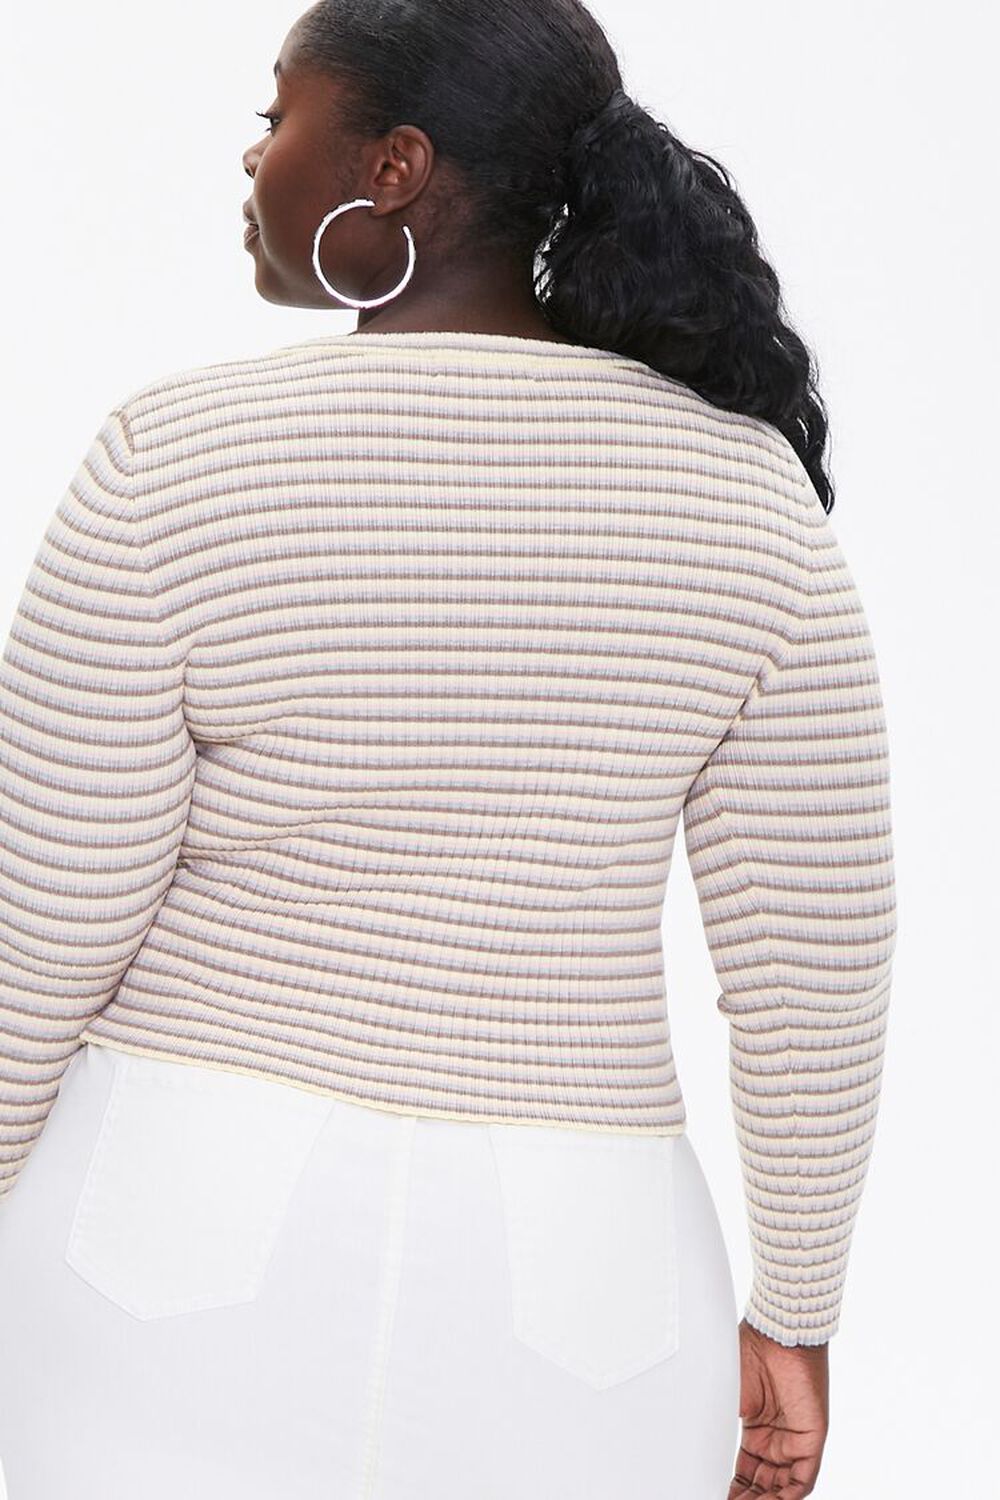 PINK/MULTI Plus Size Striped Cardigan Sweater, image 3